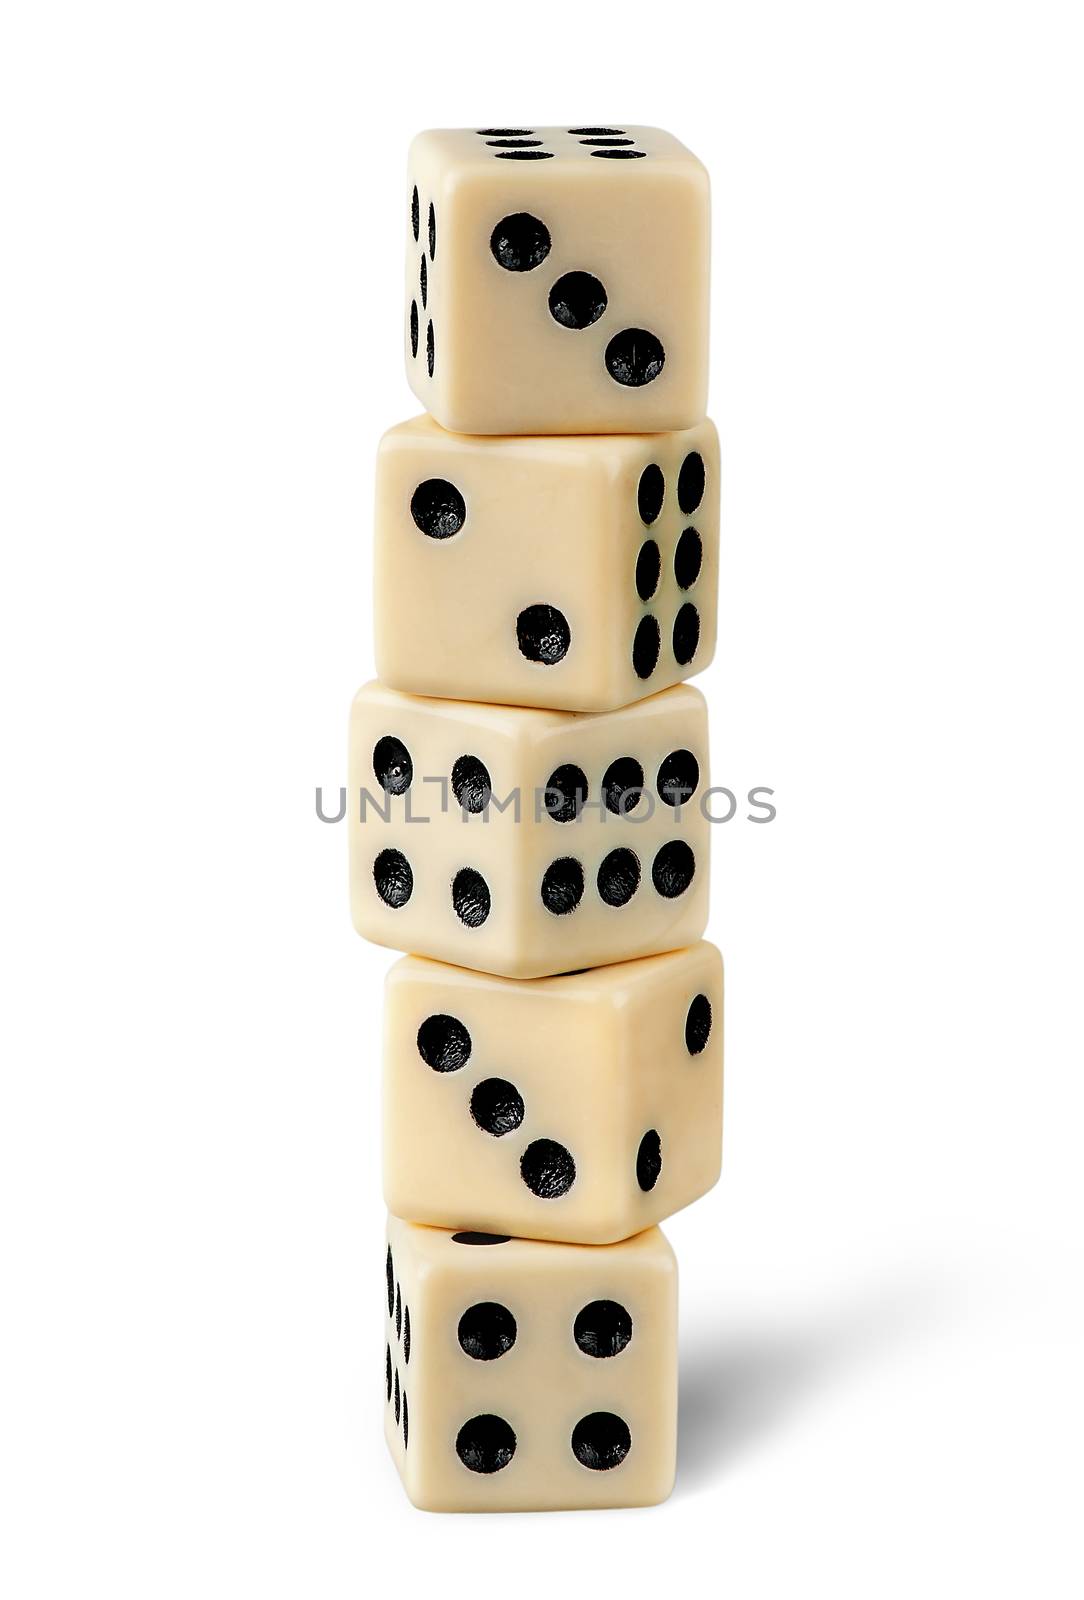 Five gaming dice by Cipariss